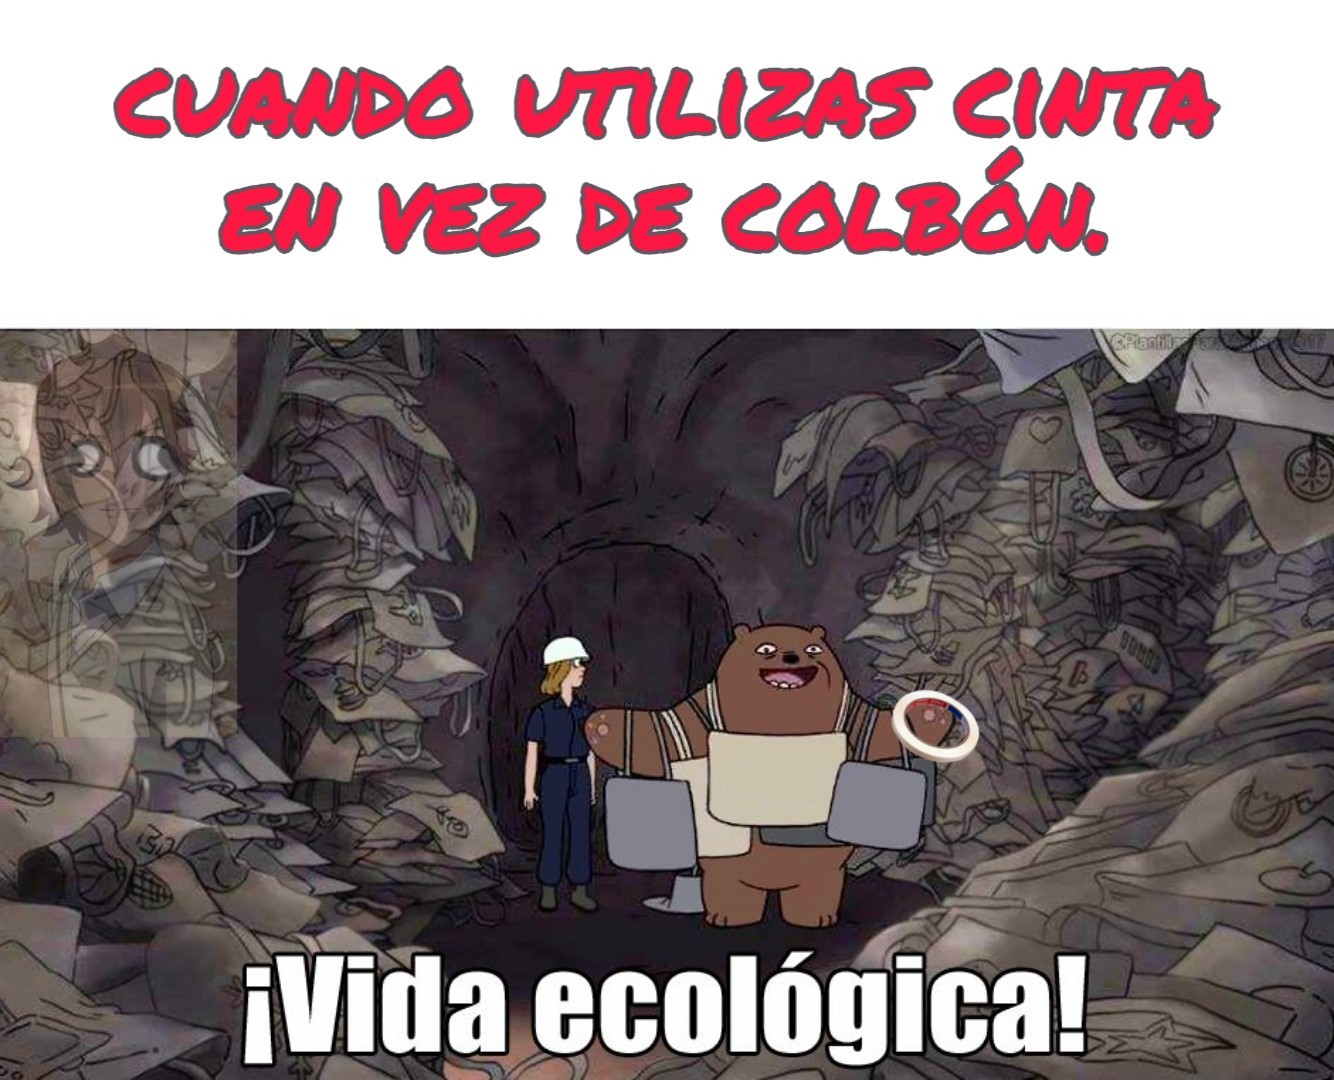 Vida ecologica ♡ - meme